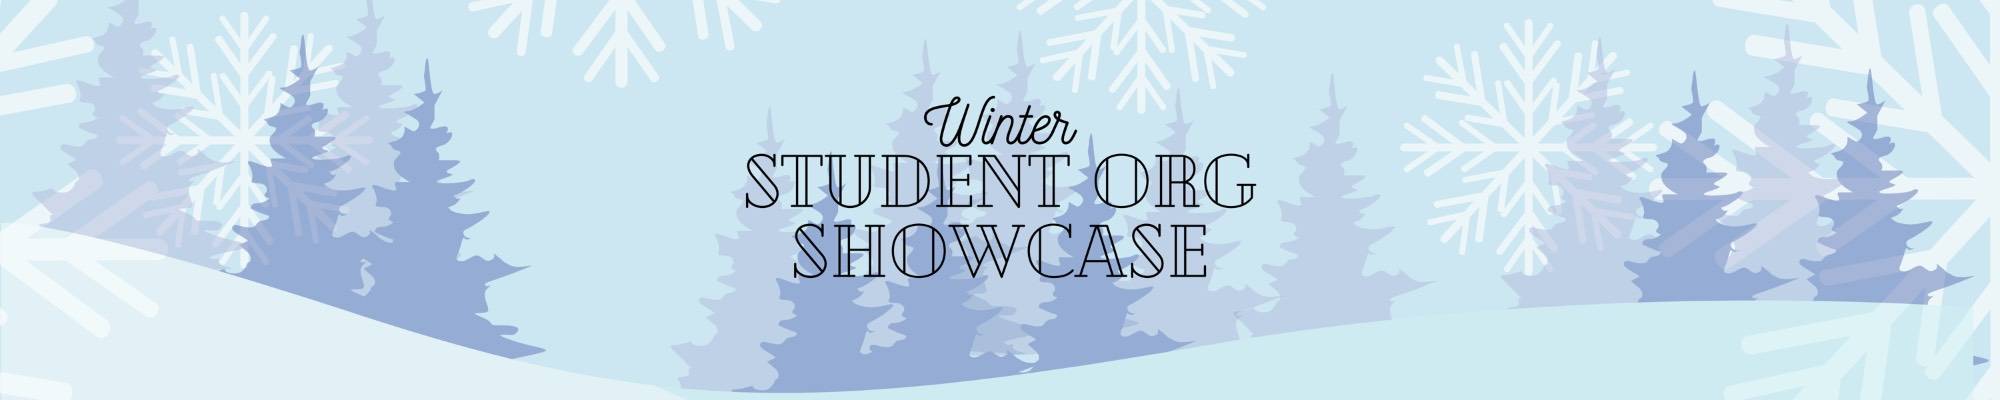 Winter Student Org Showcase banner